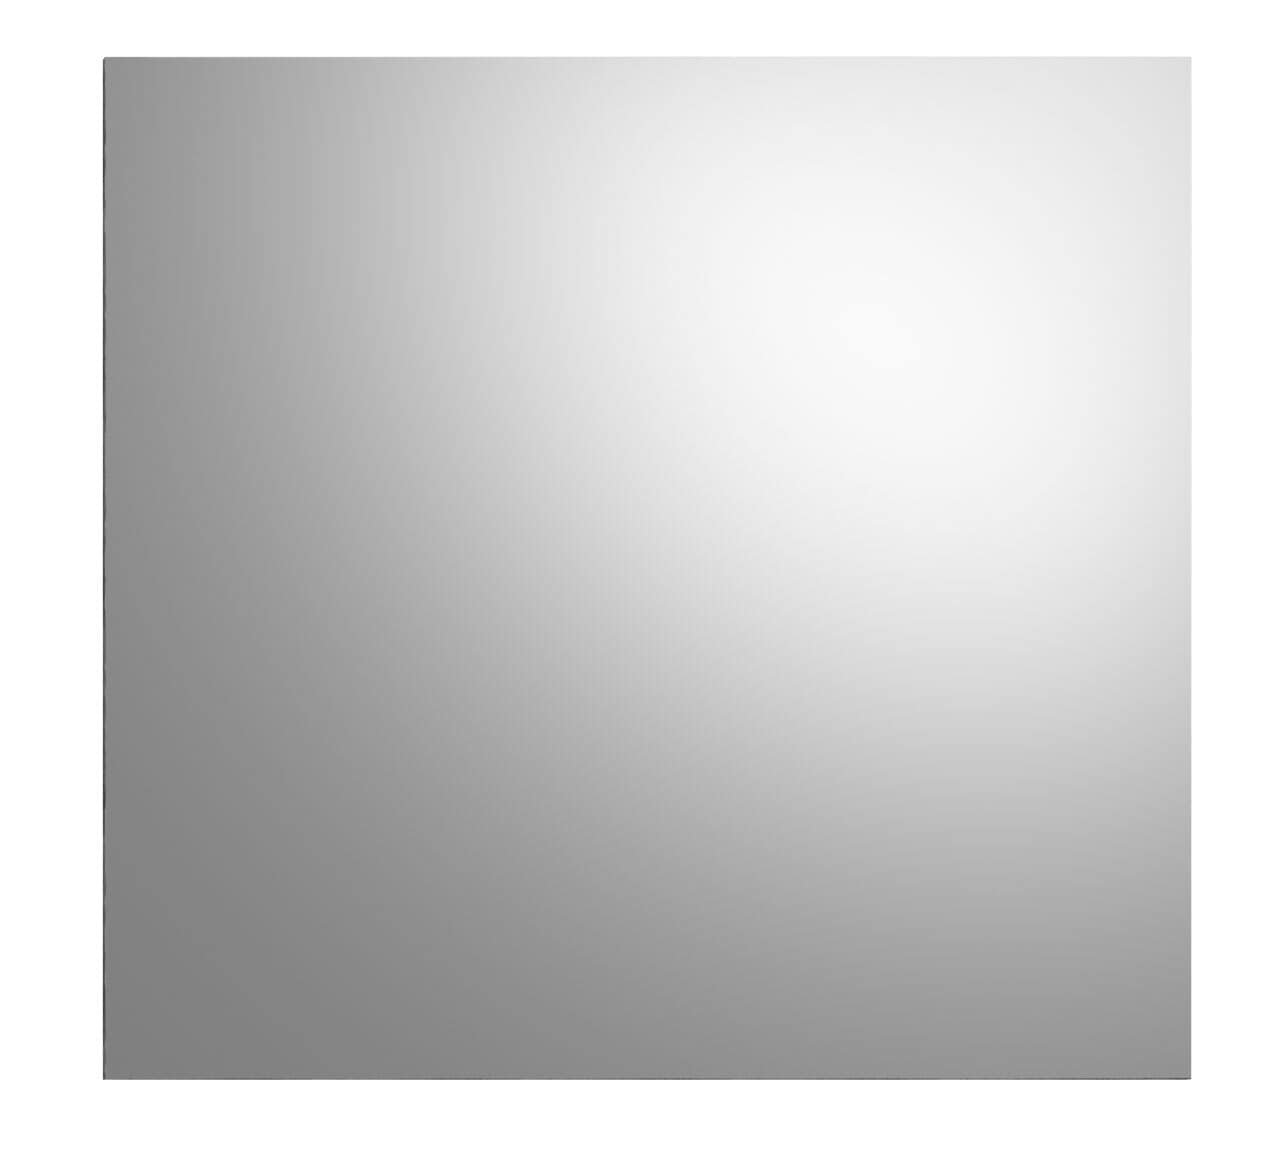 Garderobenkombination SCOUT 4-teilig grau/ weiß